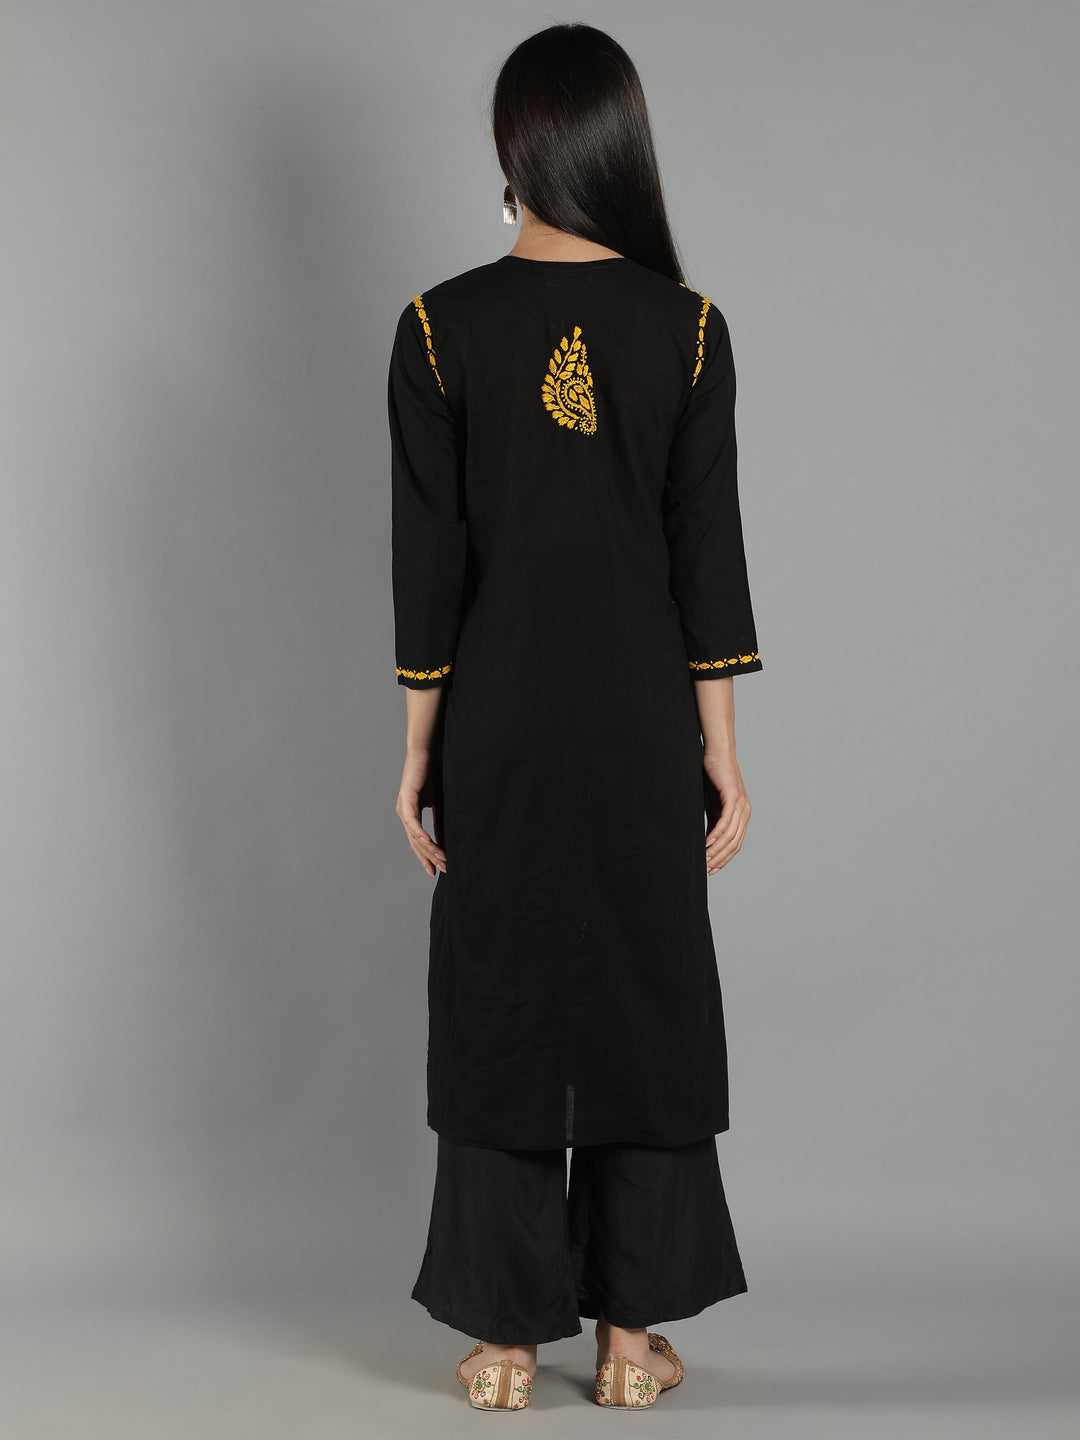 Black-Chikan-Kurta-in-Mustard-Embroidery